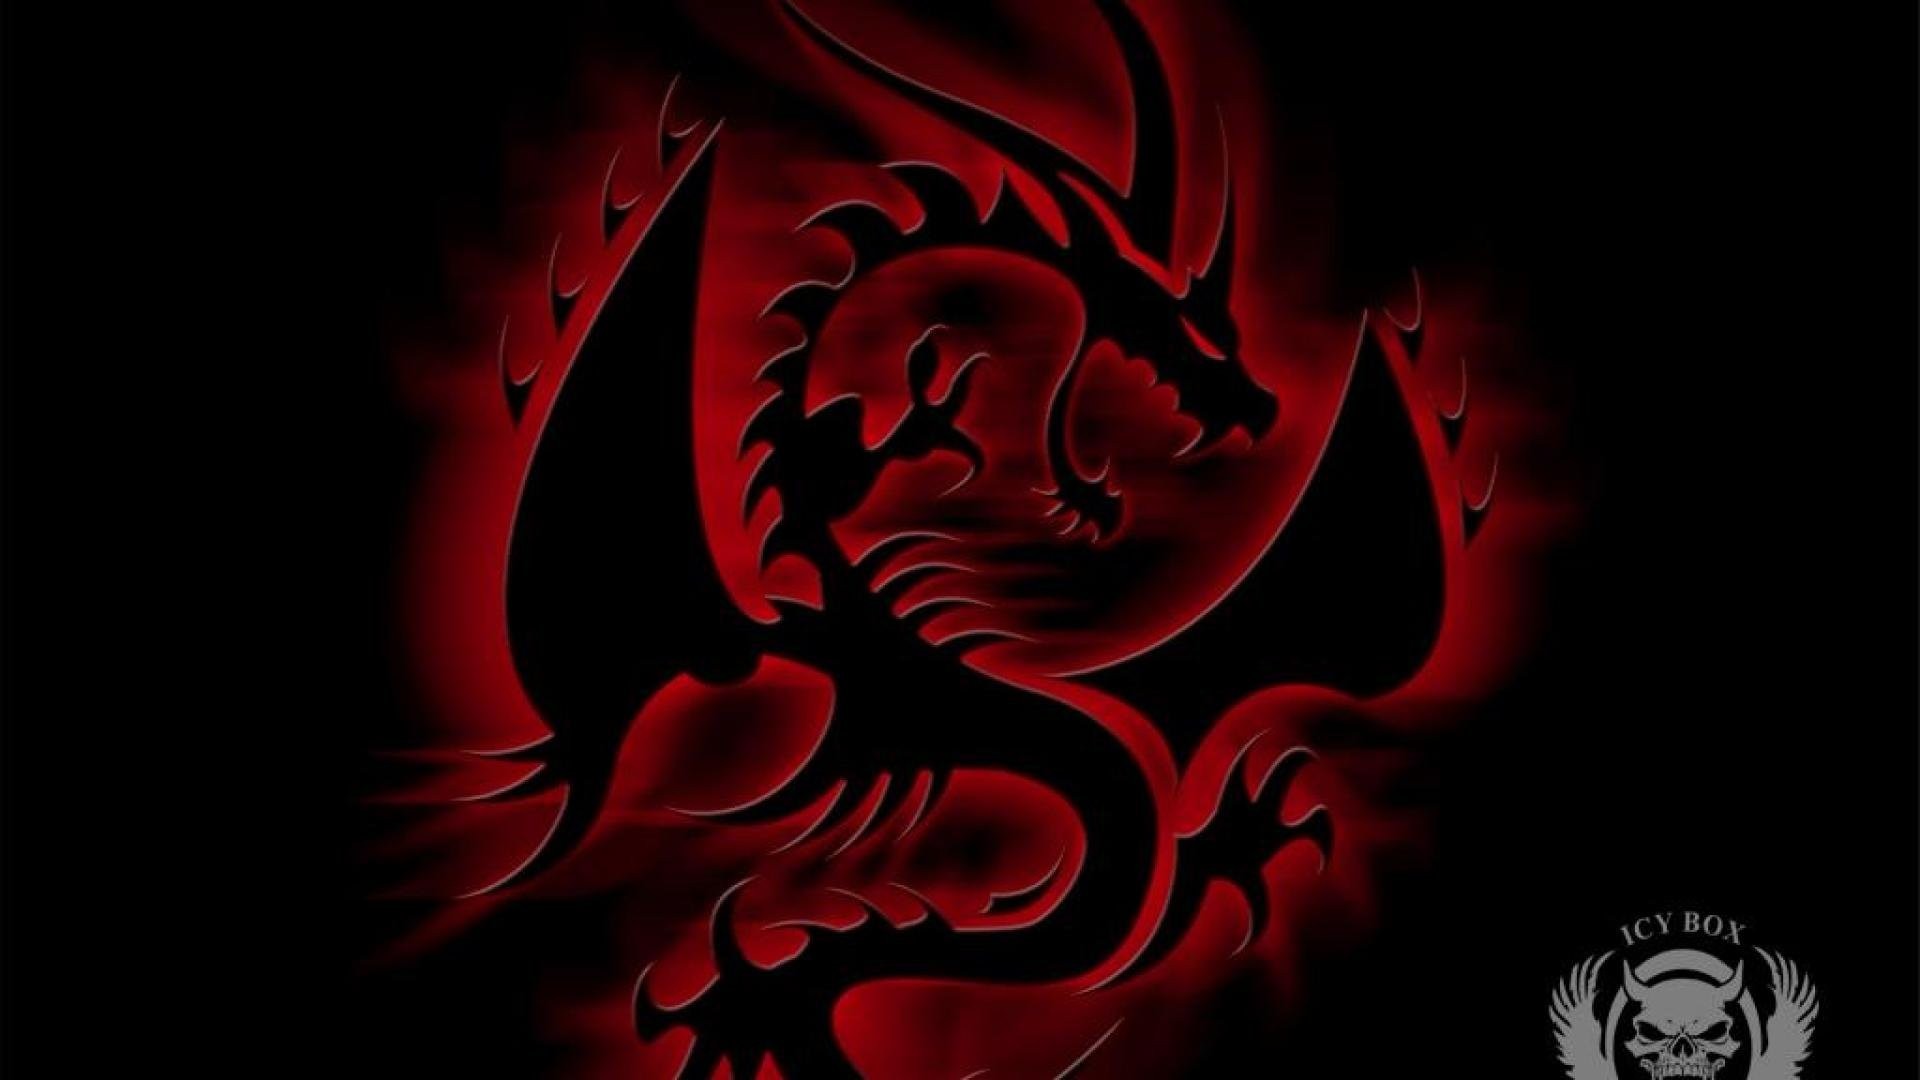 Wallpaper Colourful Dragon Dark Rojo Abstracto Cool Image Art